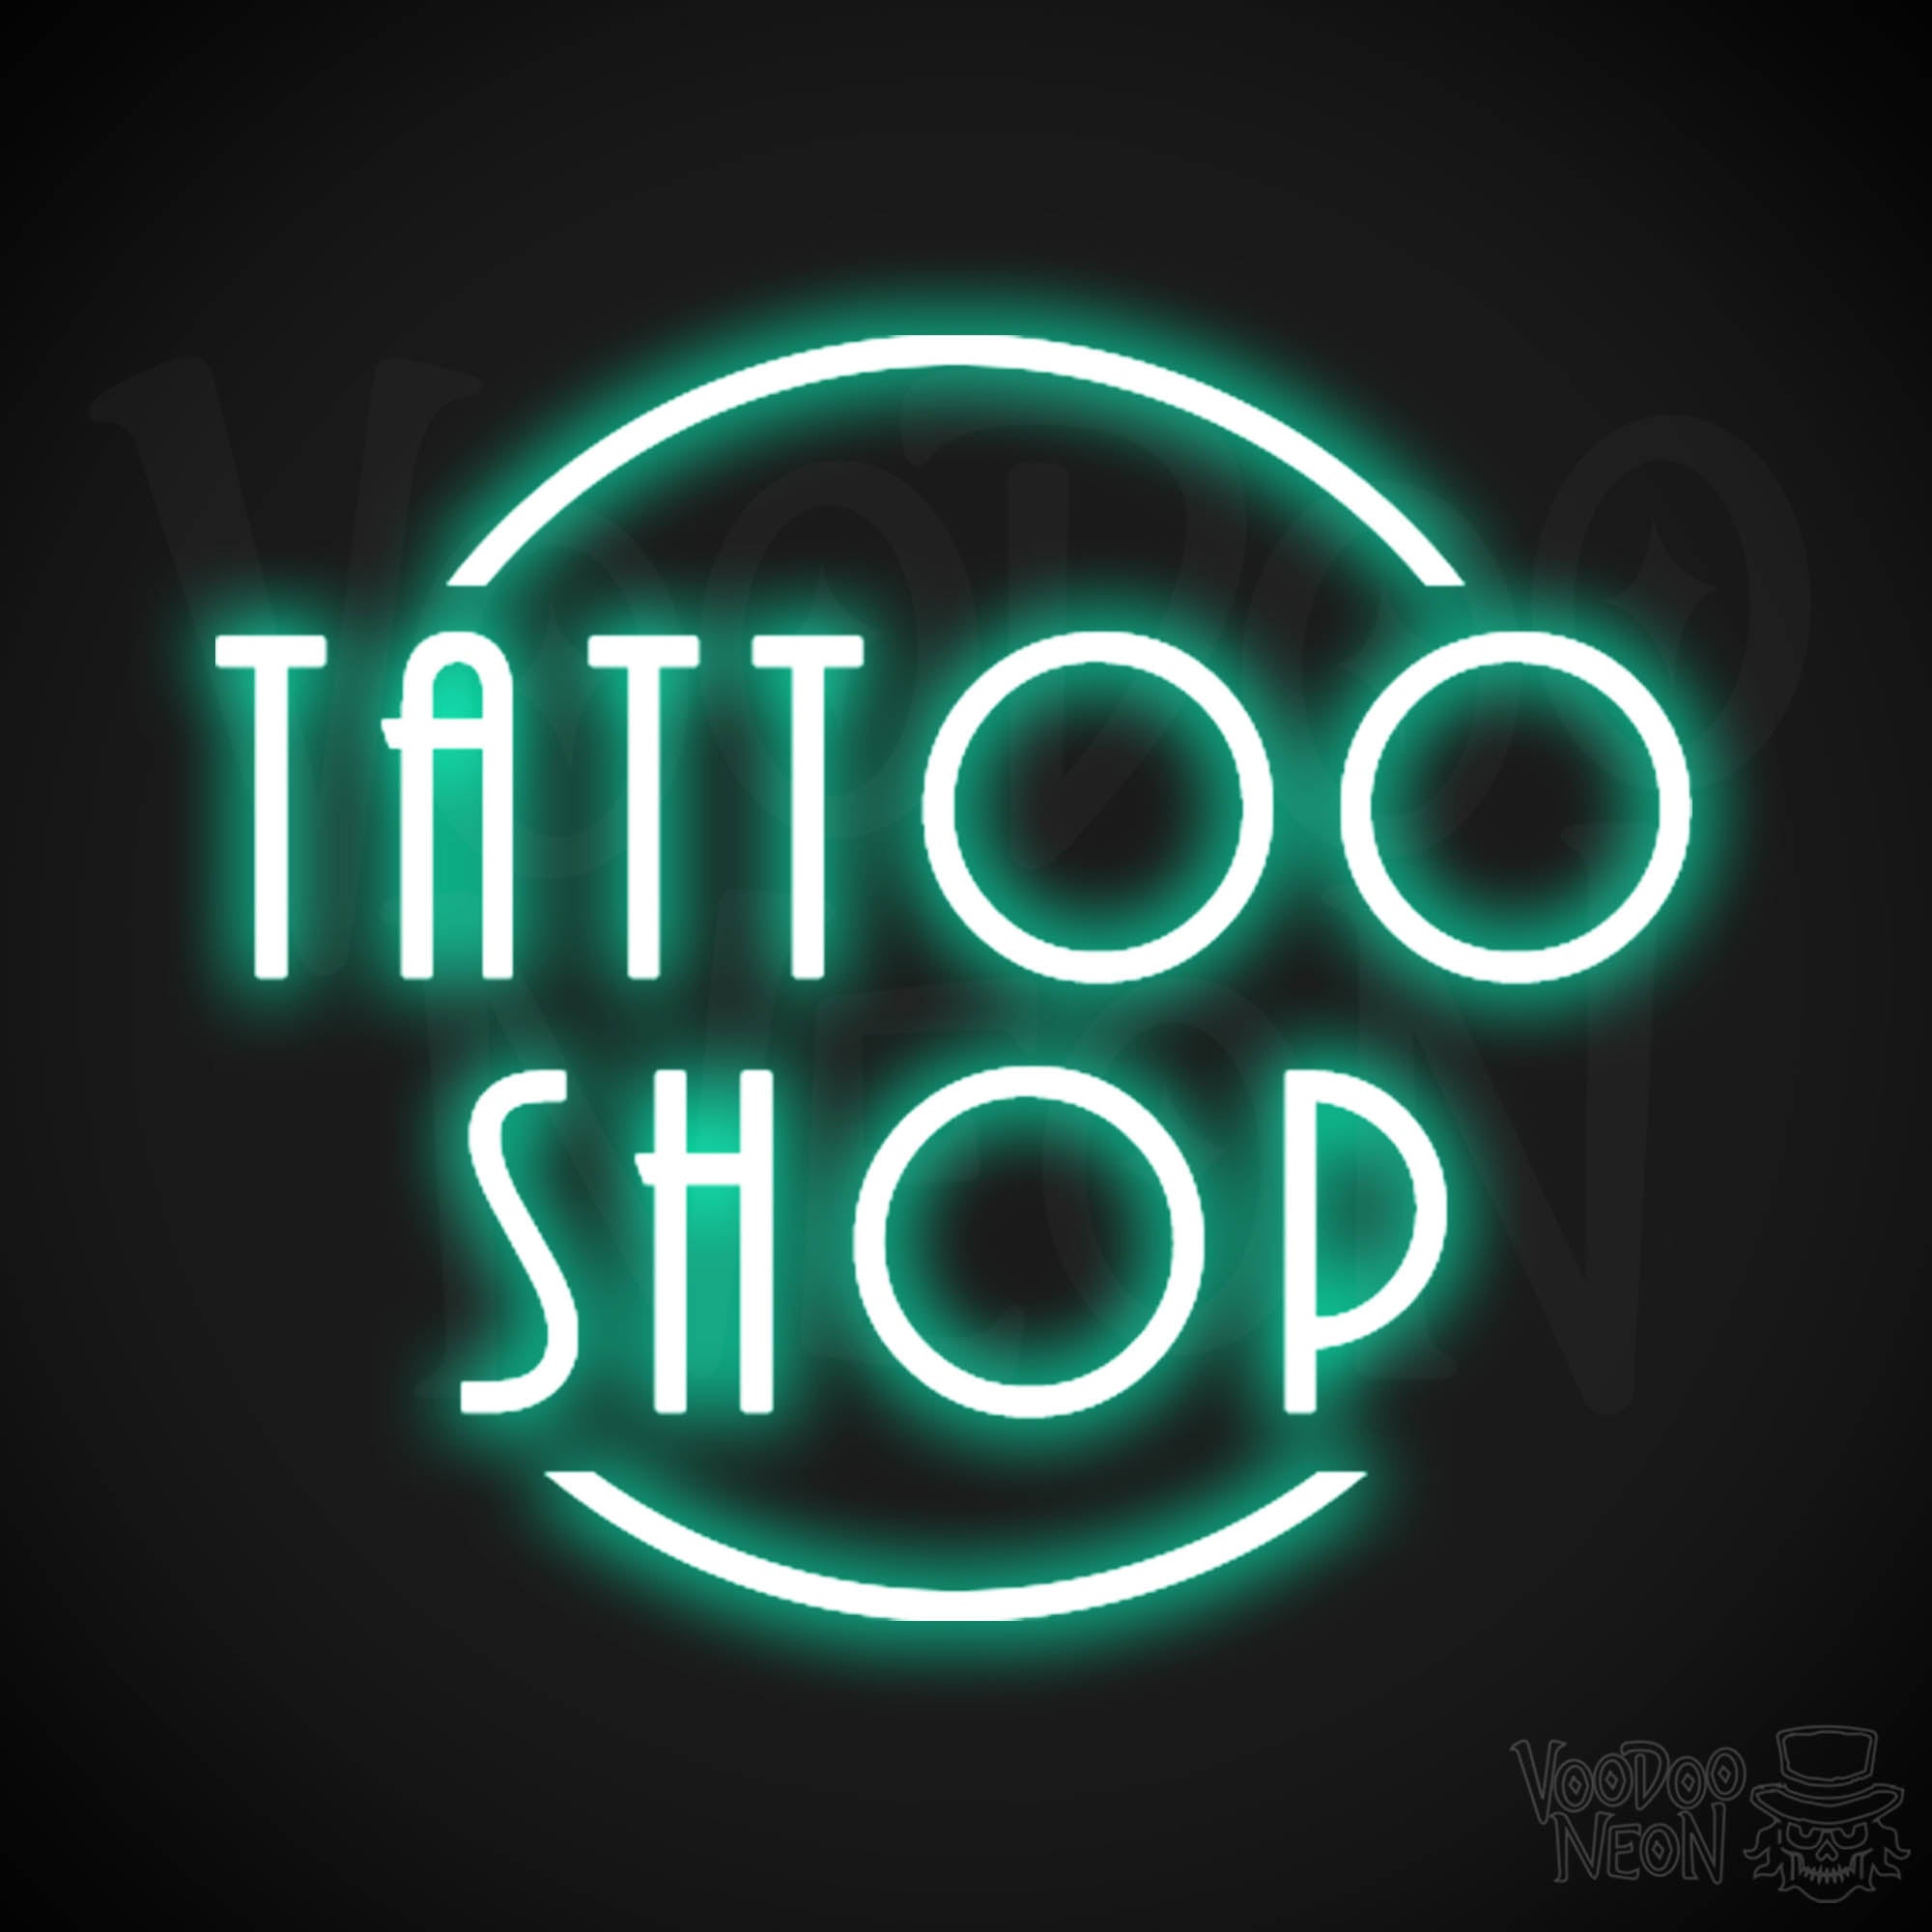 Tattoo Shop Studio Window Sticker Wall Decal Sign Quality Vinyl Big Size  Gold | eBay